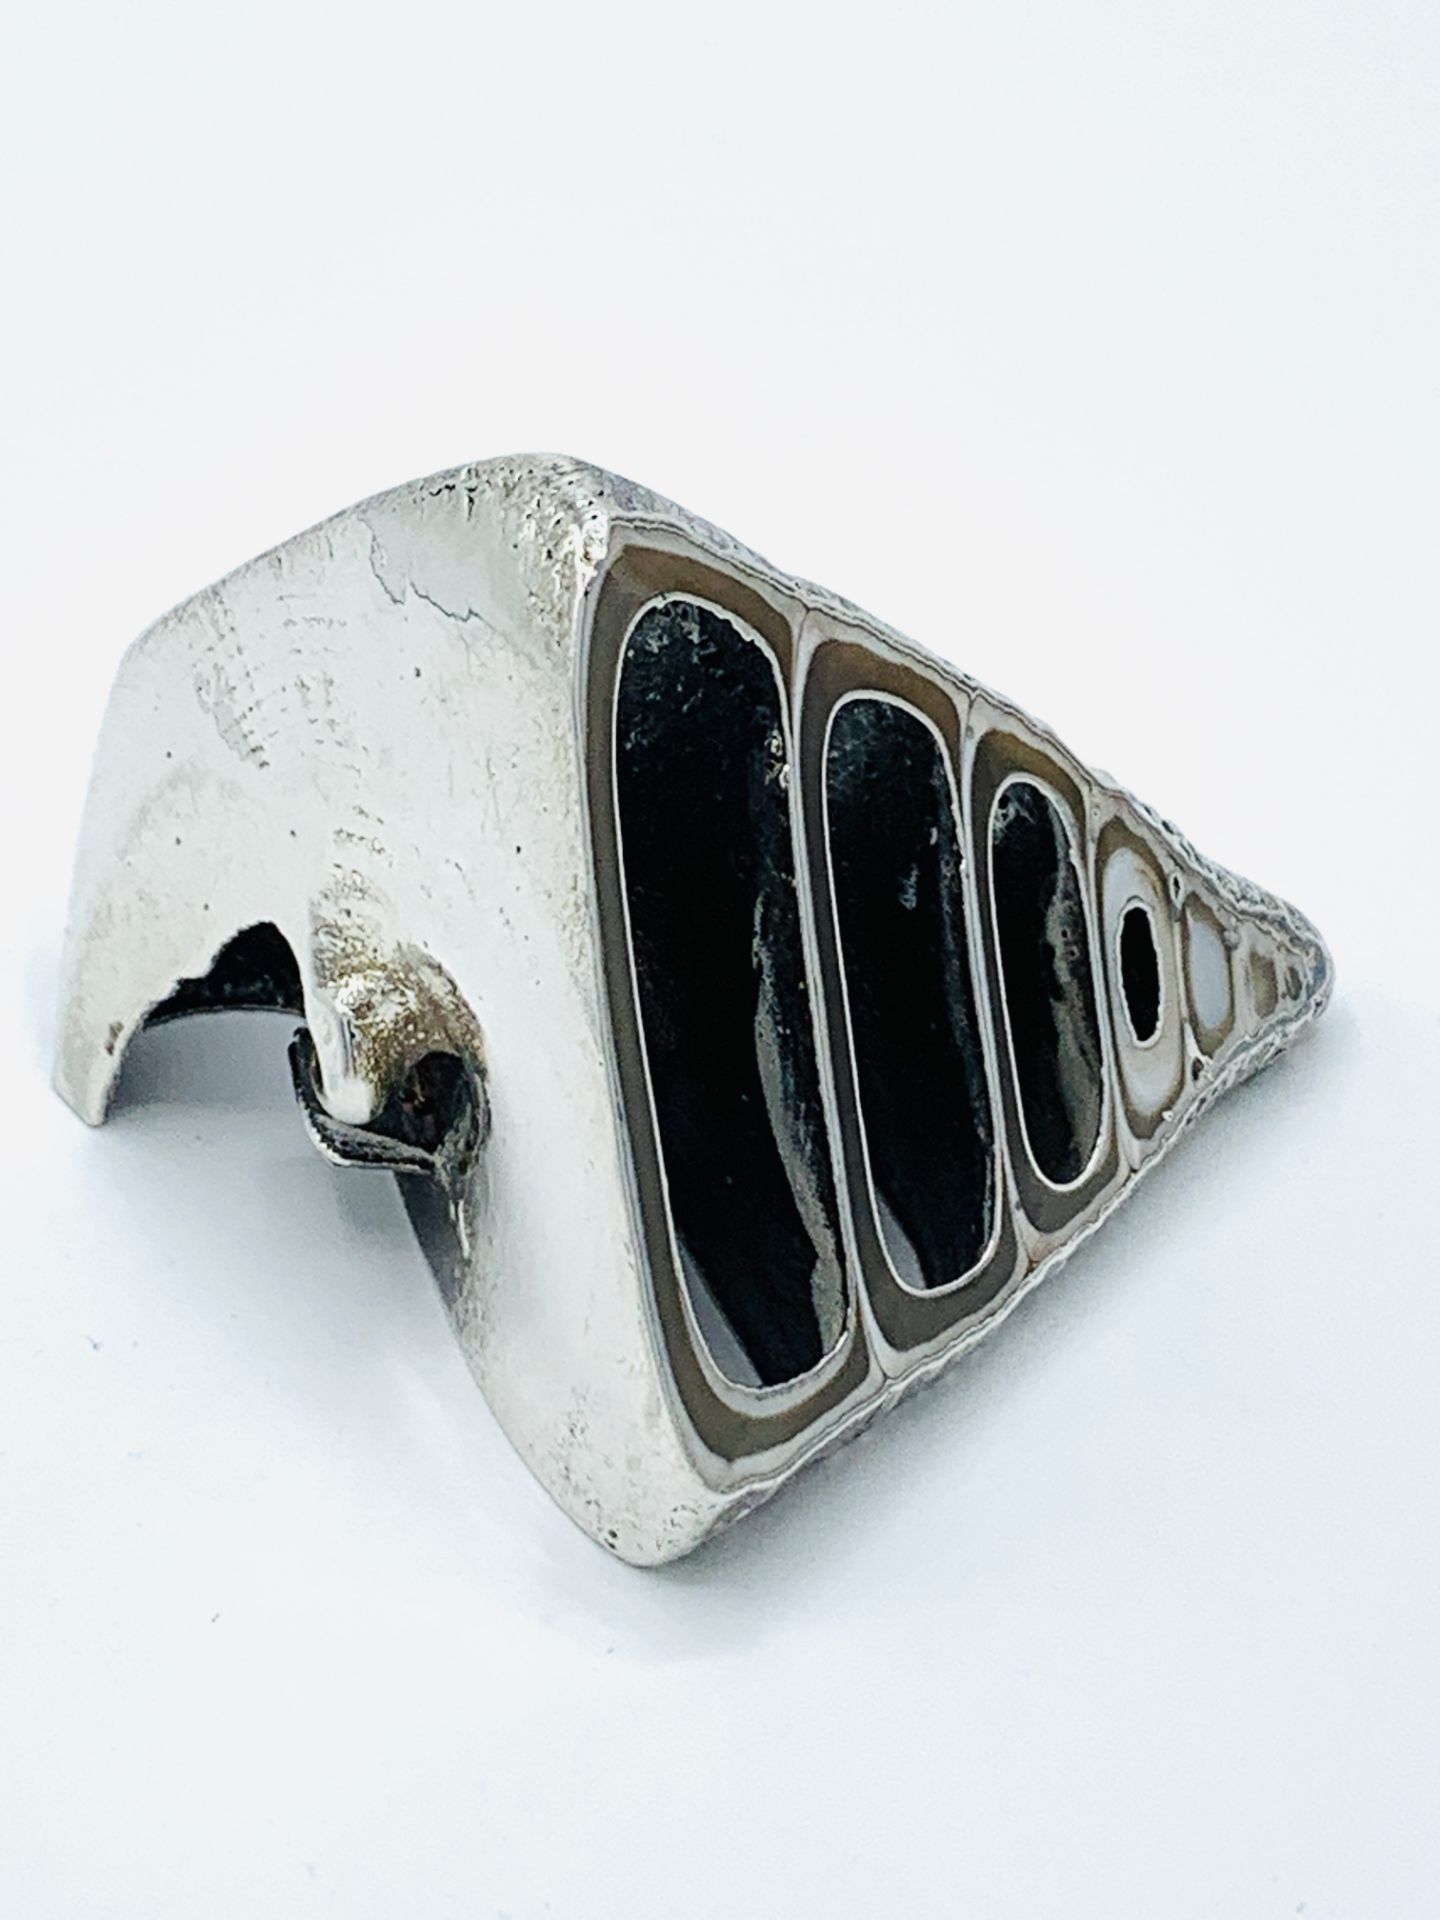 Ross Somerville Morgan shell sculpture/paperweight. - Image 2 of 3